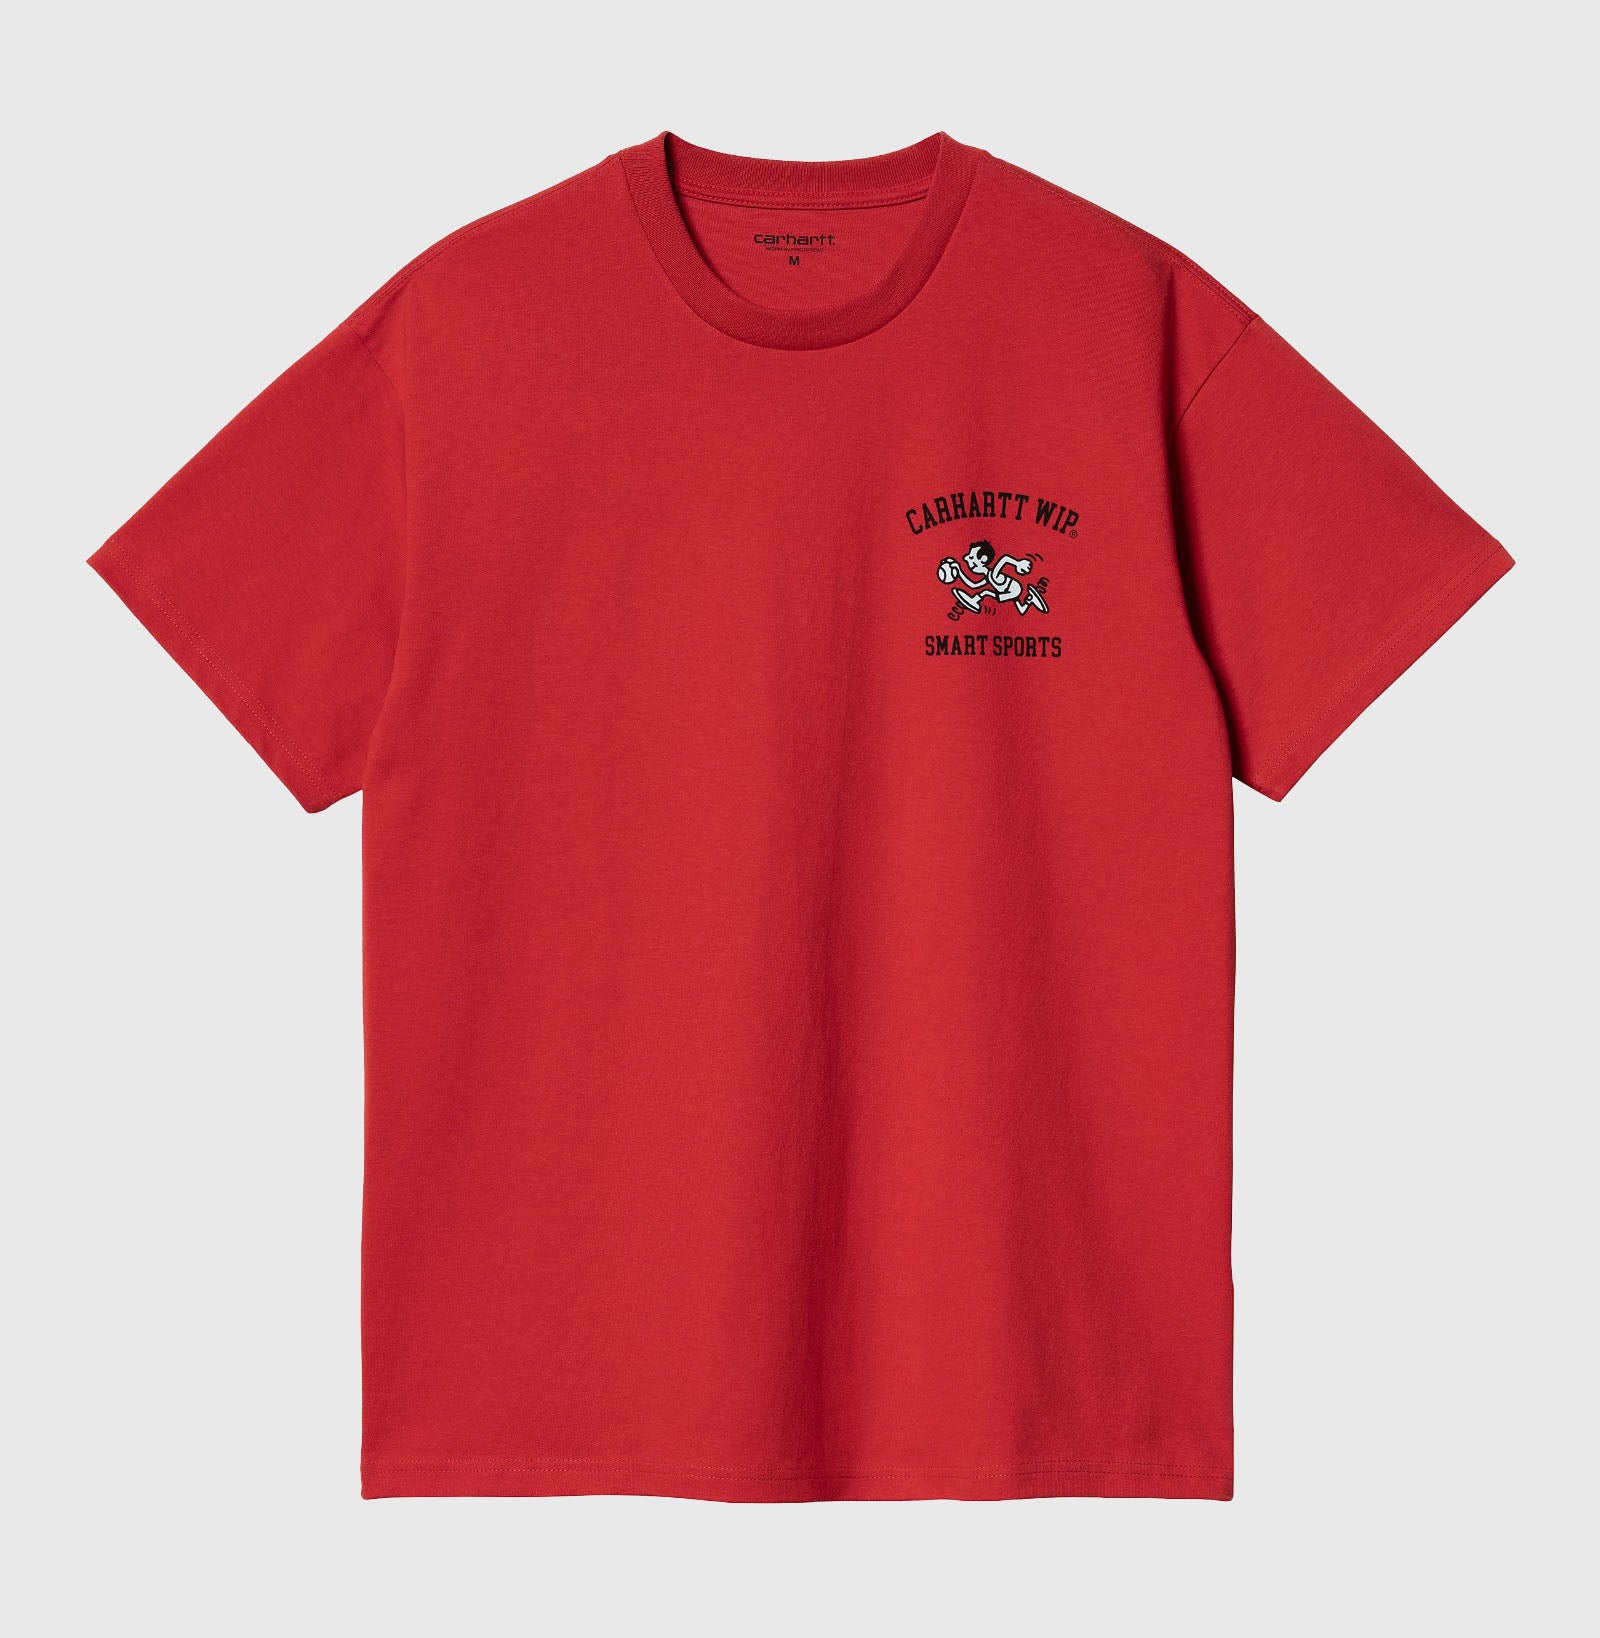 Carhartt Wip S/s Smart Sports T-shirt Rosso Uomo - 6